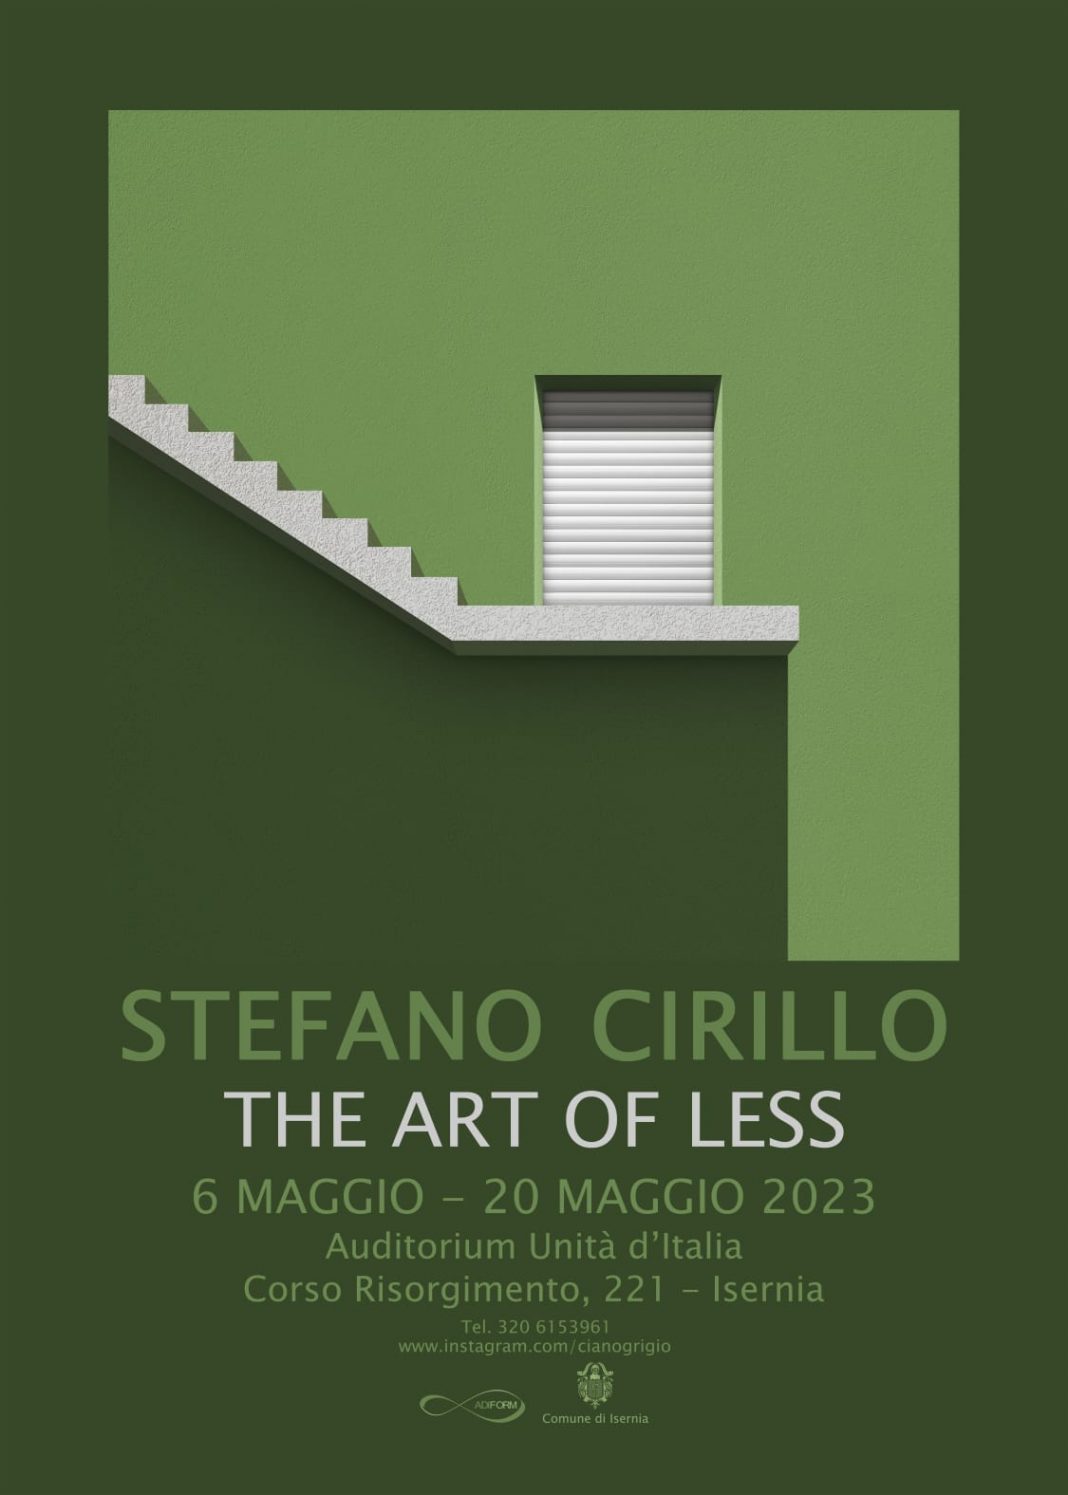 Stefano Cirillo – THE ART OF LESShttps://www.exibart.com/repository/media/formidable/11/img/0c2/The-art-of-less-1068x1495.jpg